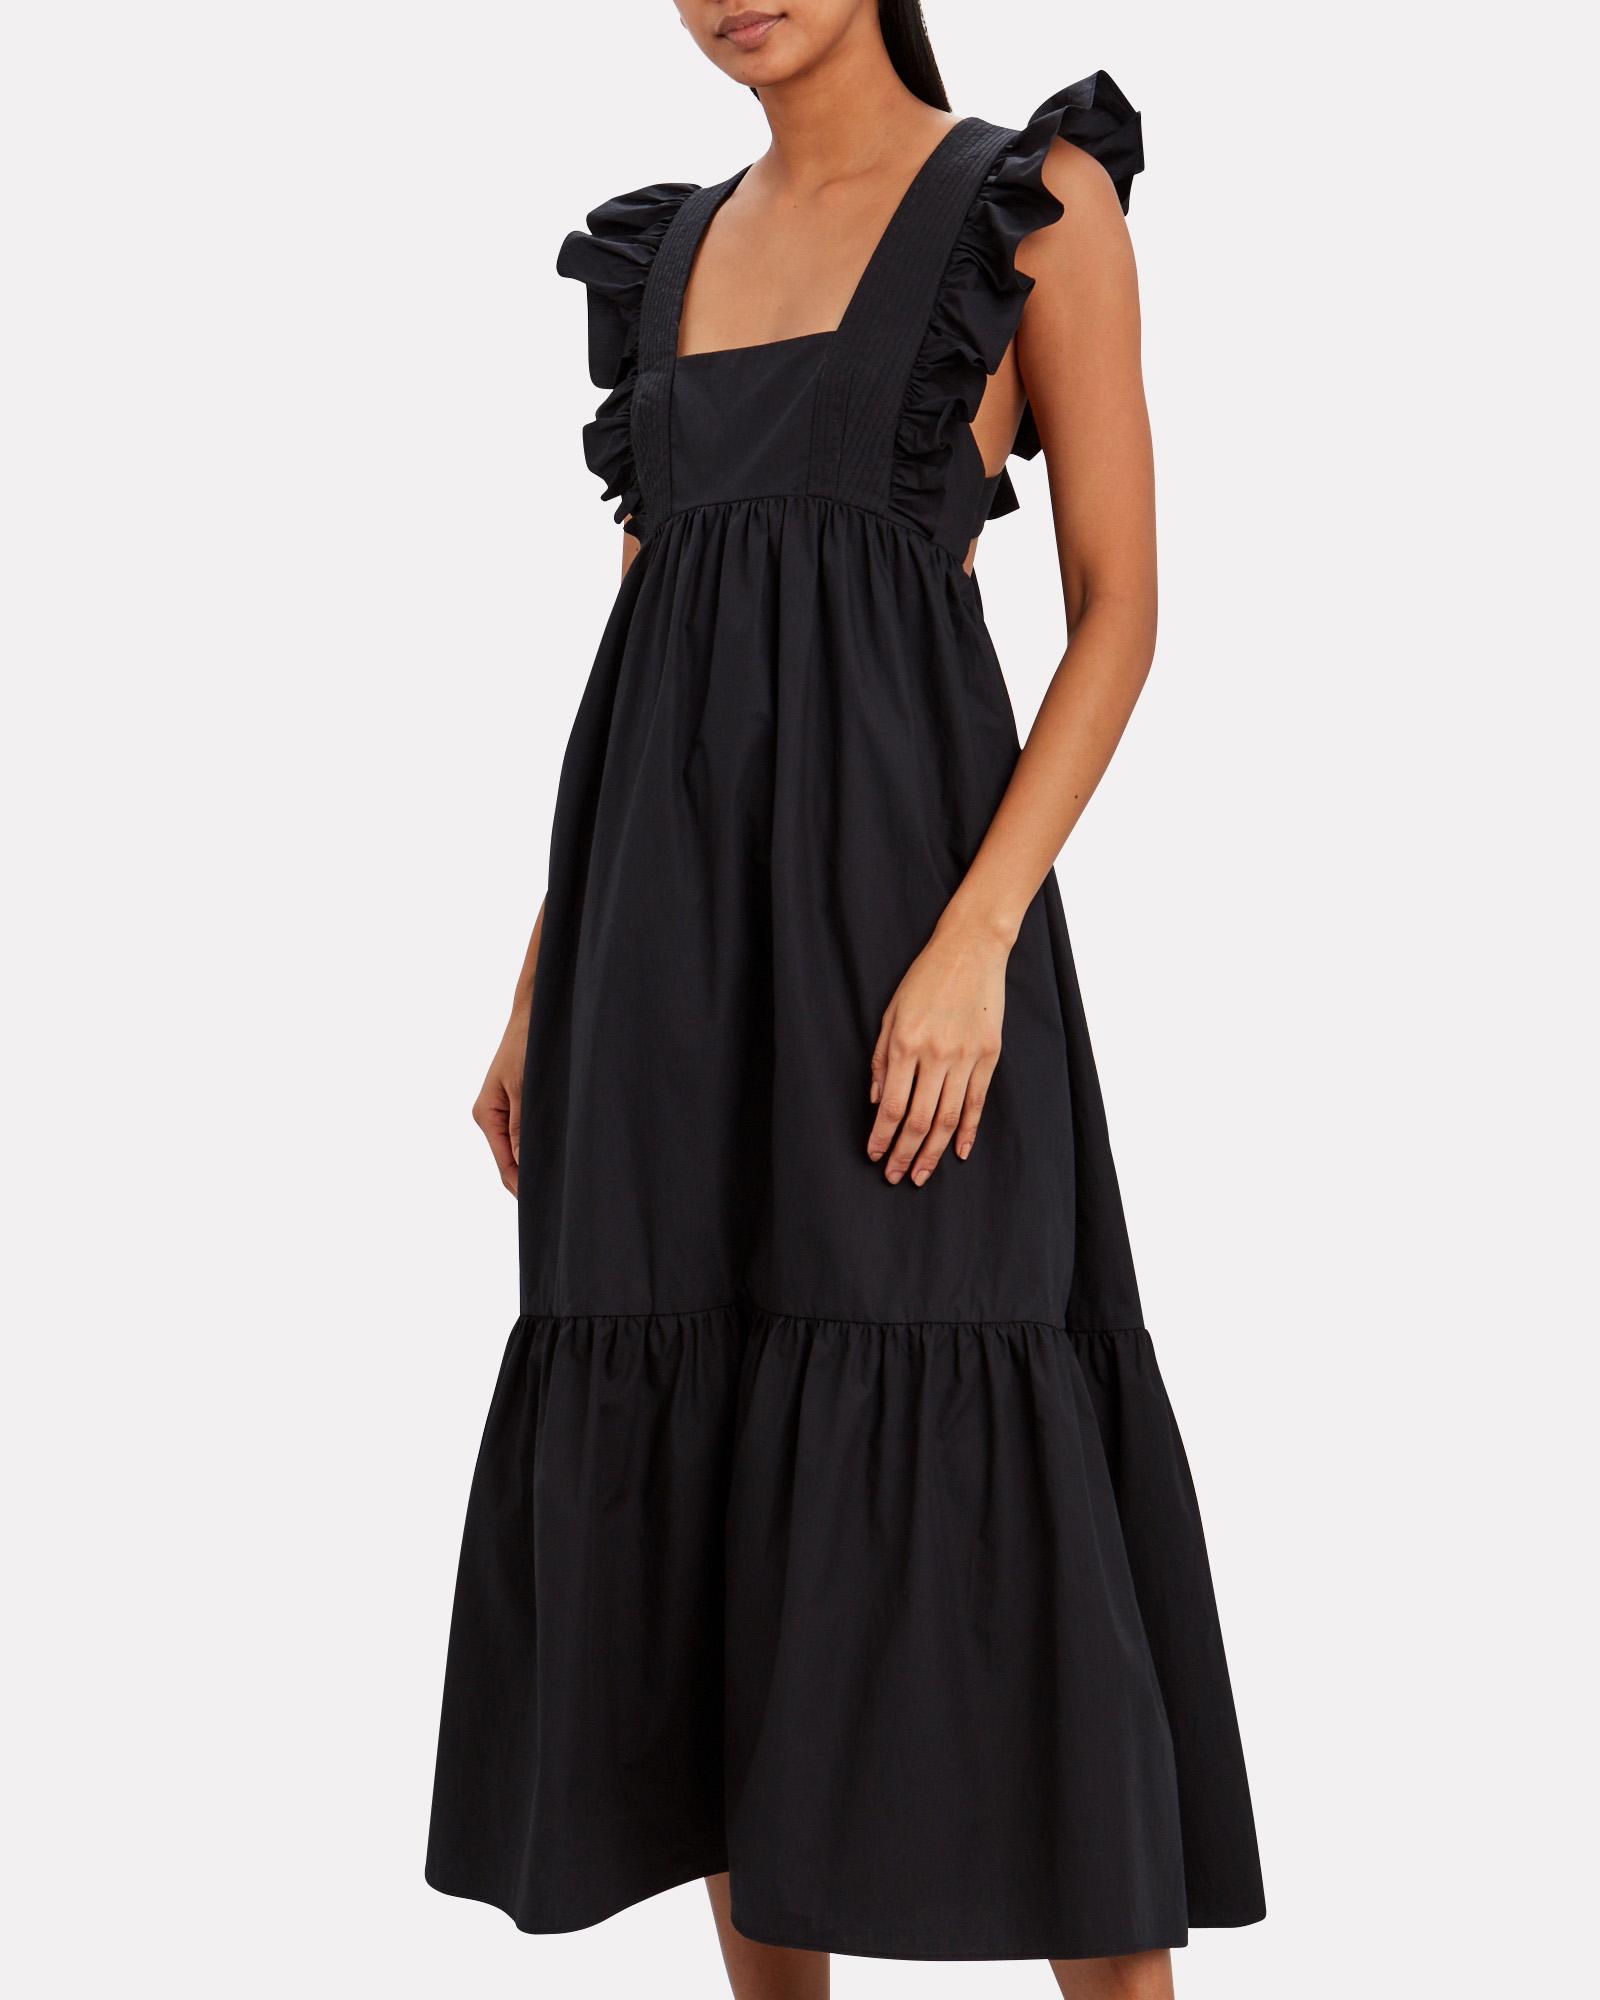 Self-Portrait Cotton Poplin Midi Dress in Black - Lyst